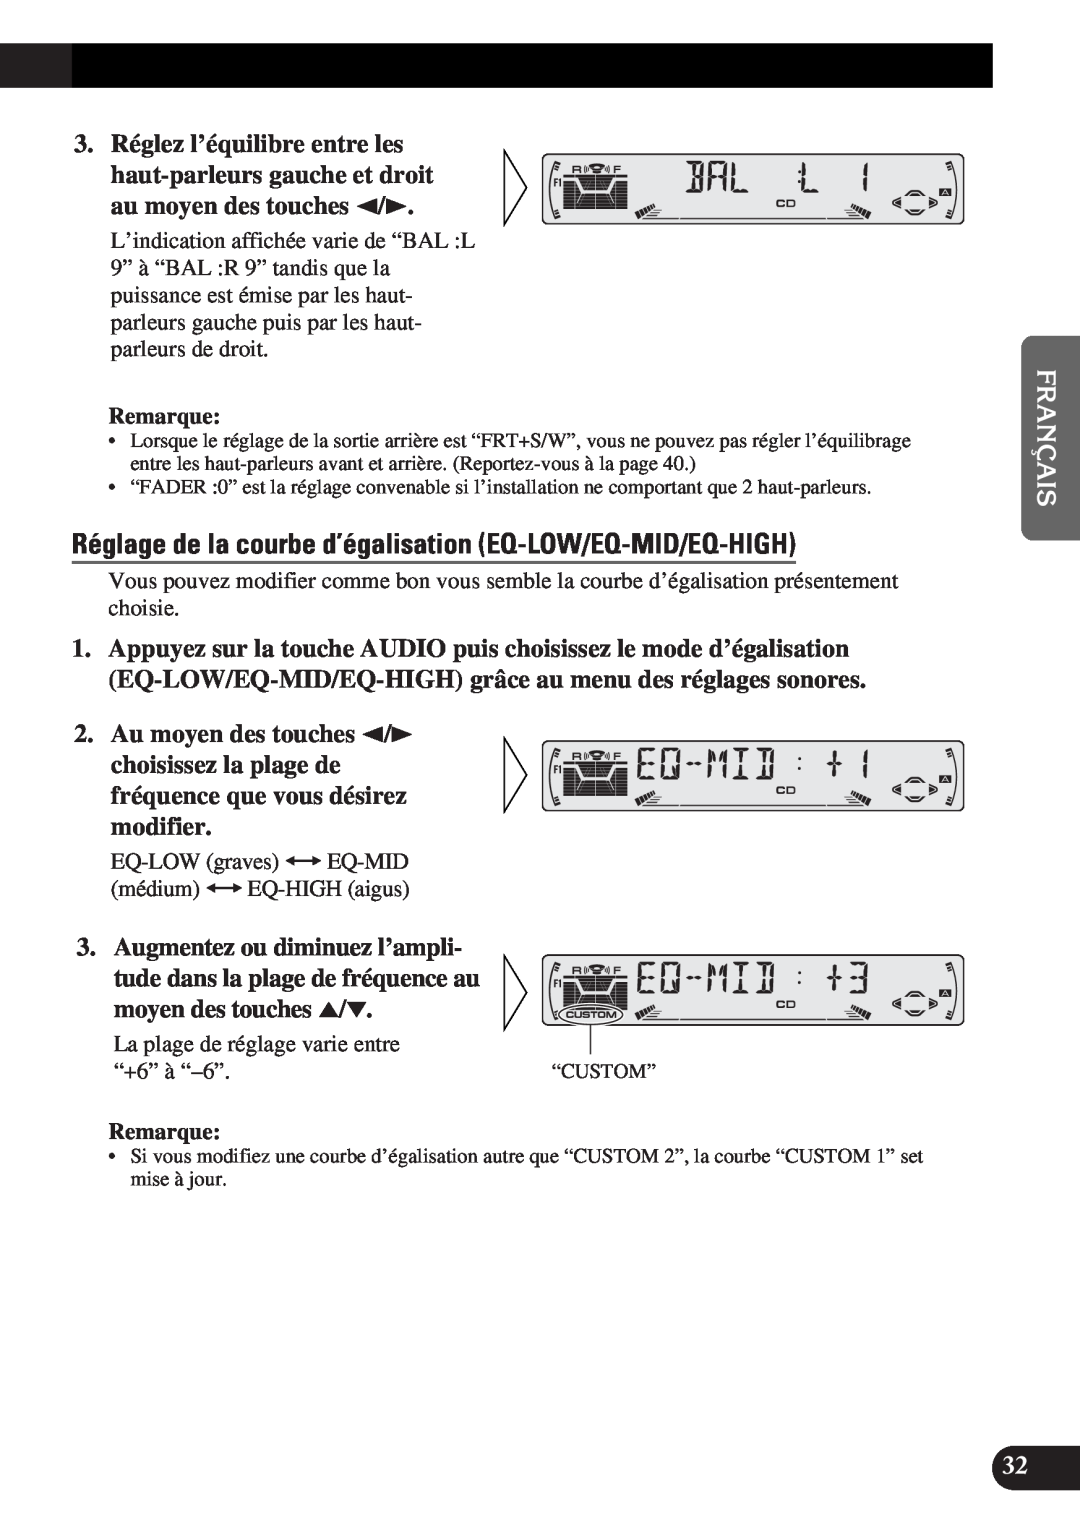 Pioneer DEH-P4300 operation manual Au moyen des touches 2/3 